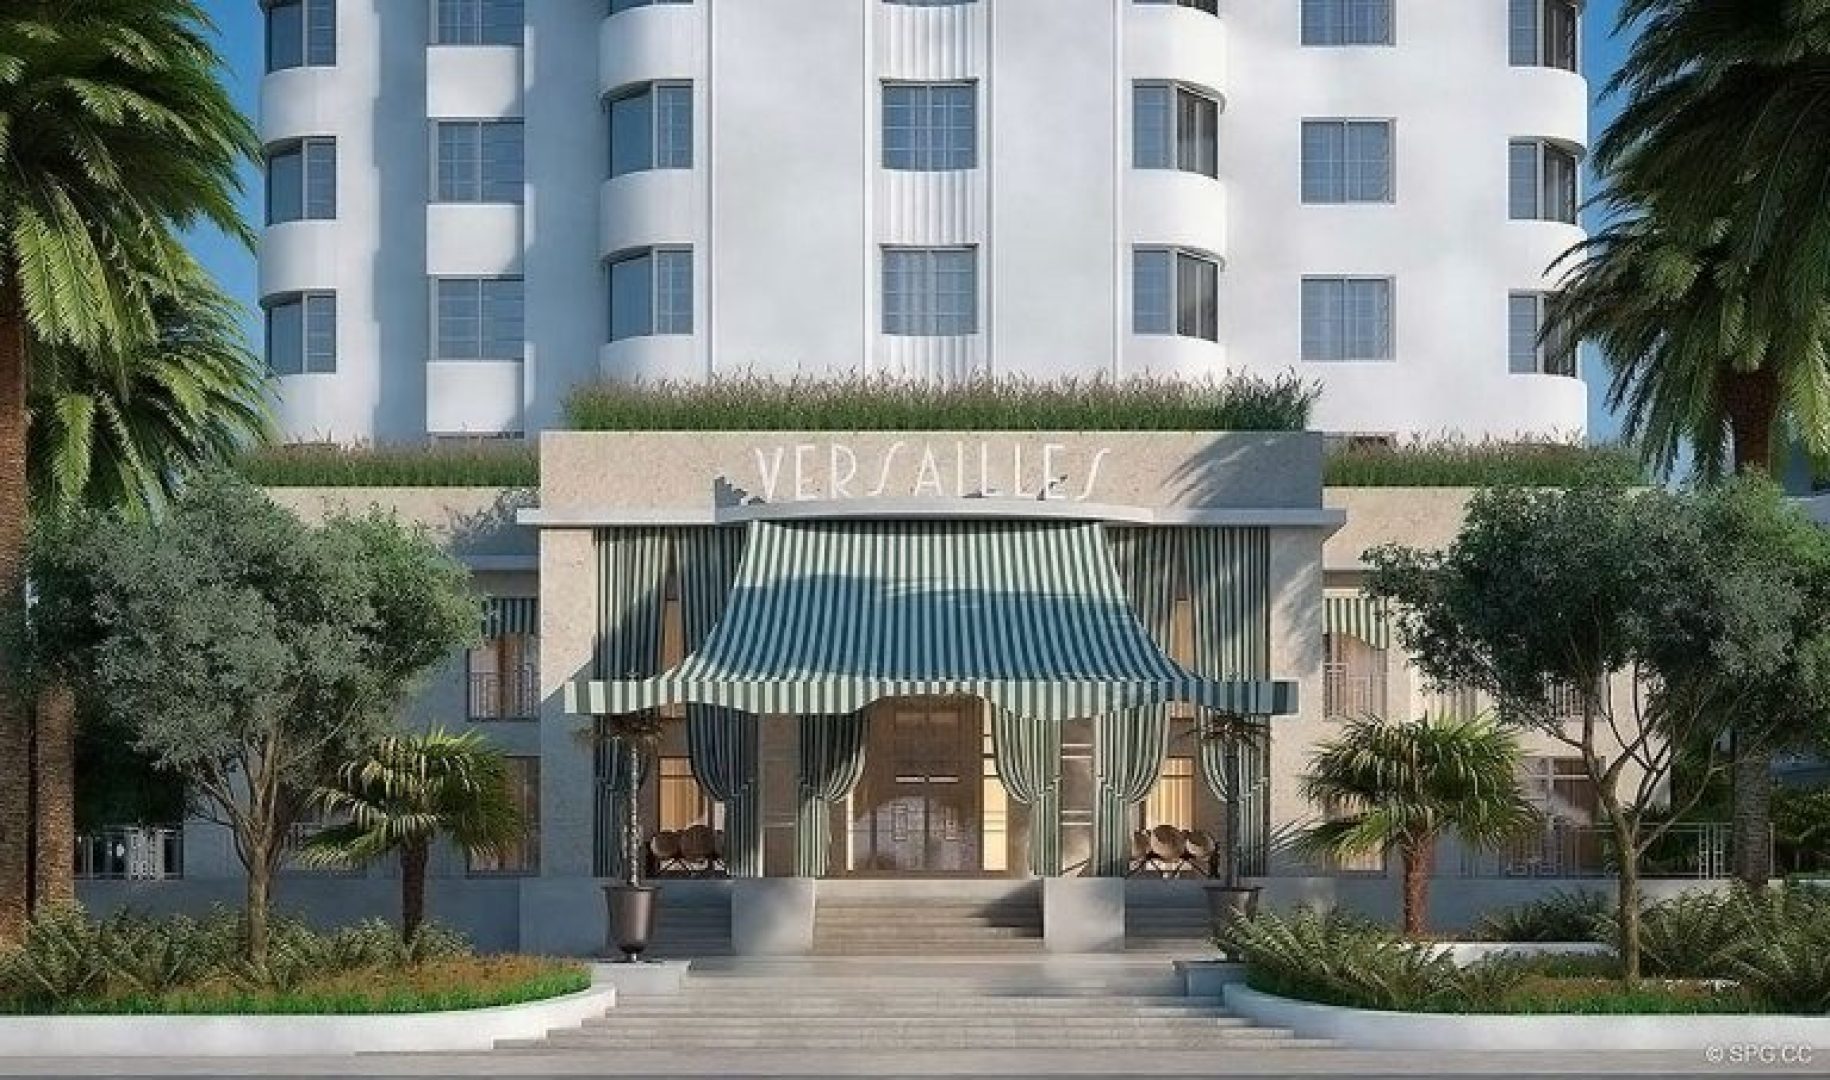 Entrance into Faena Versailles Classic, Luxury Oceanfront Condos in Miami Beach, Florida 33140